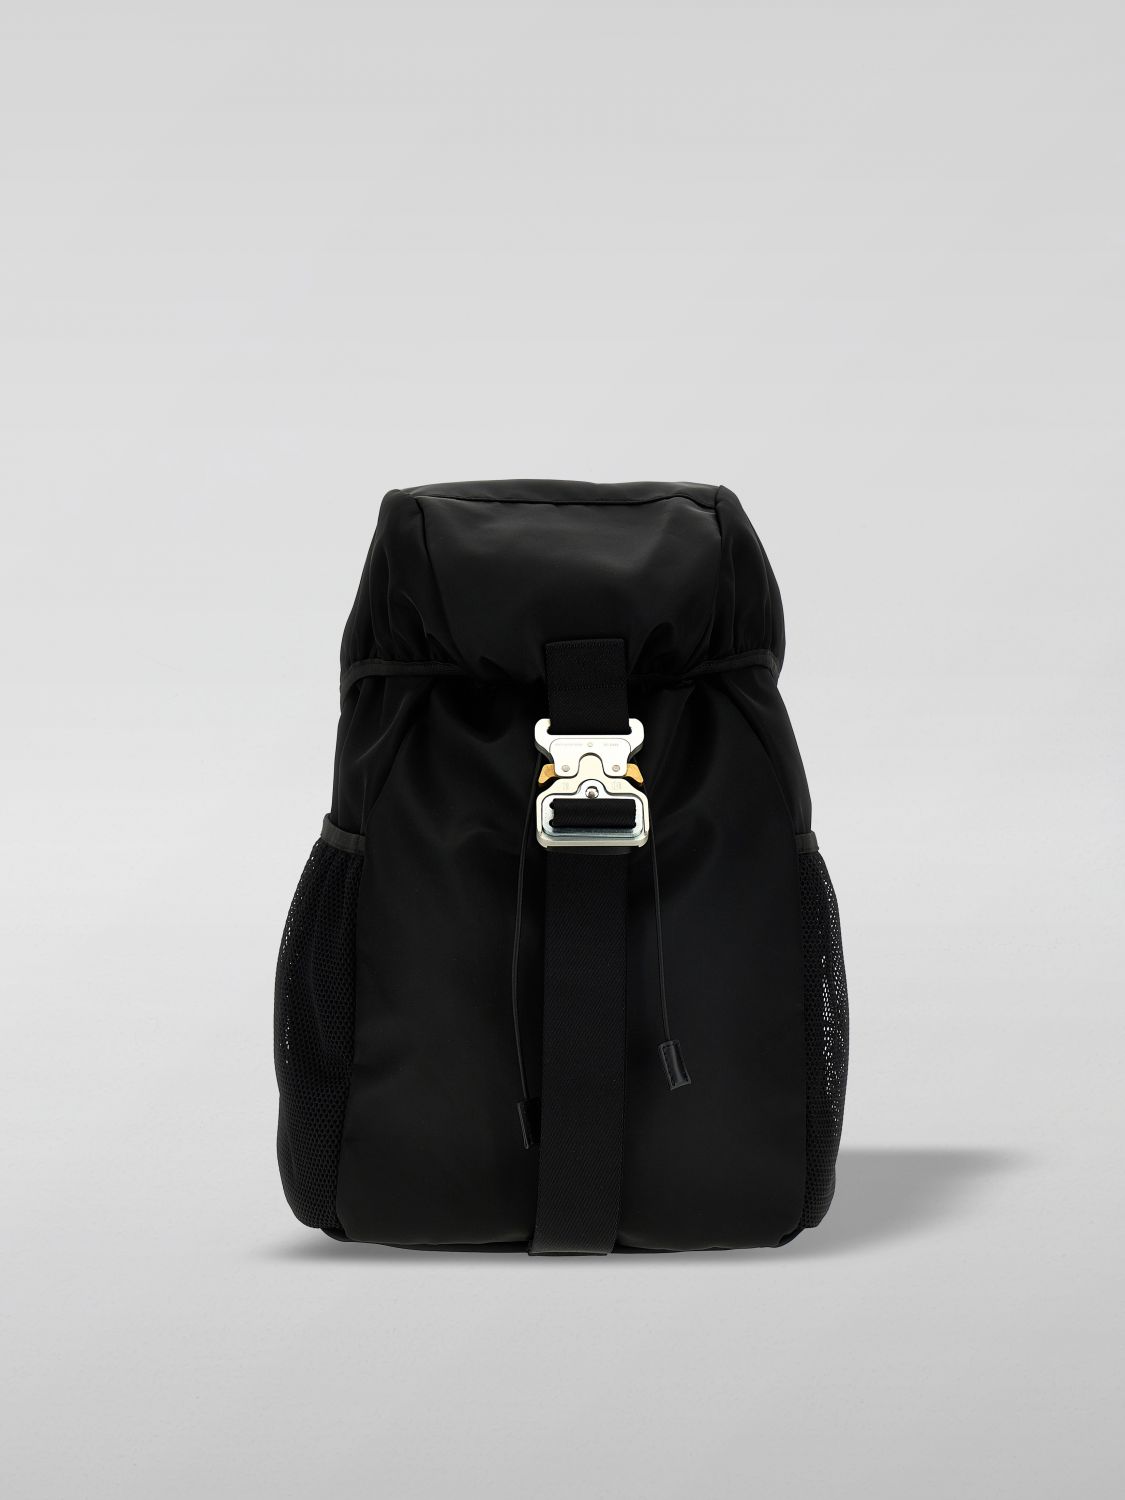 Alyx Backpack ALYX Men colour Black